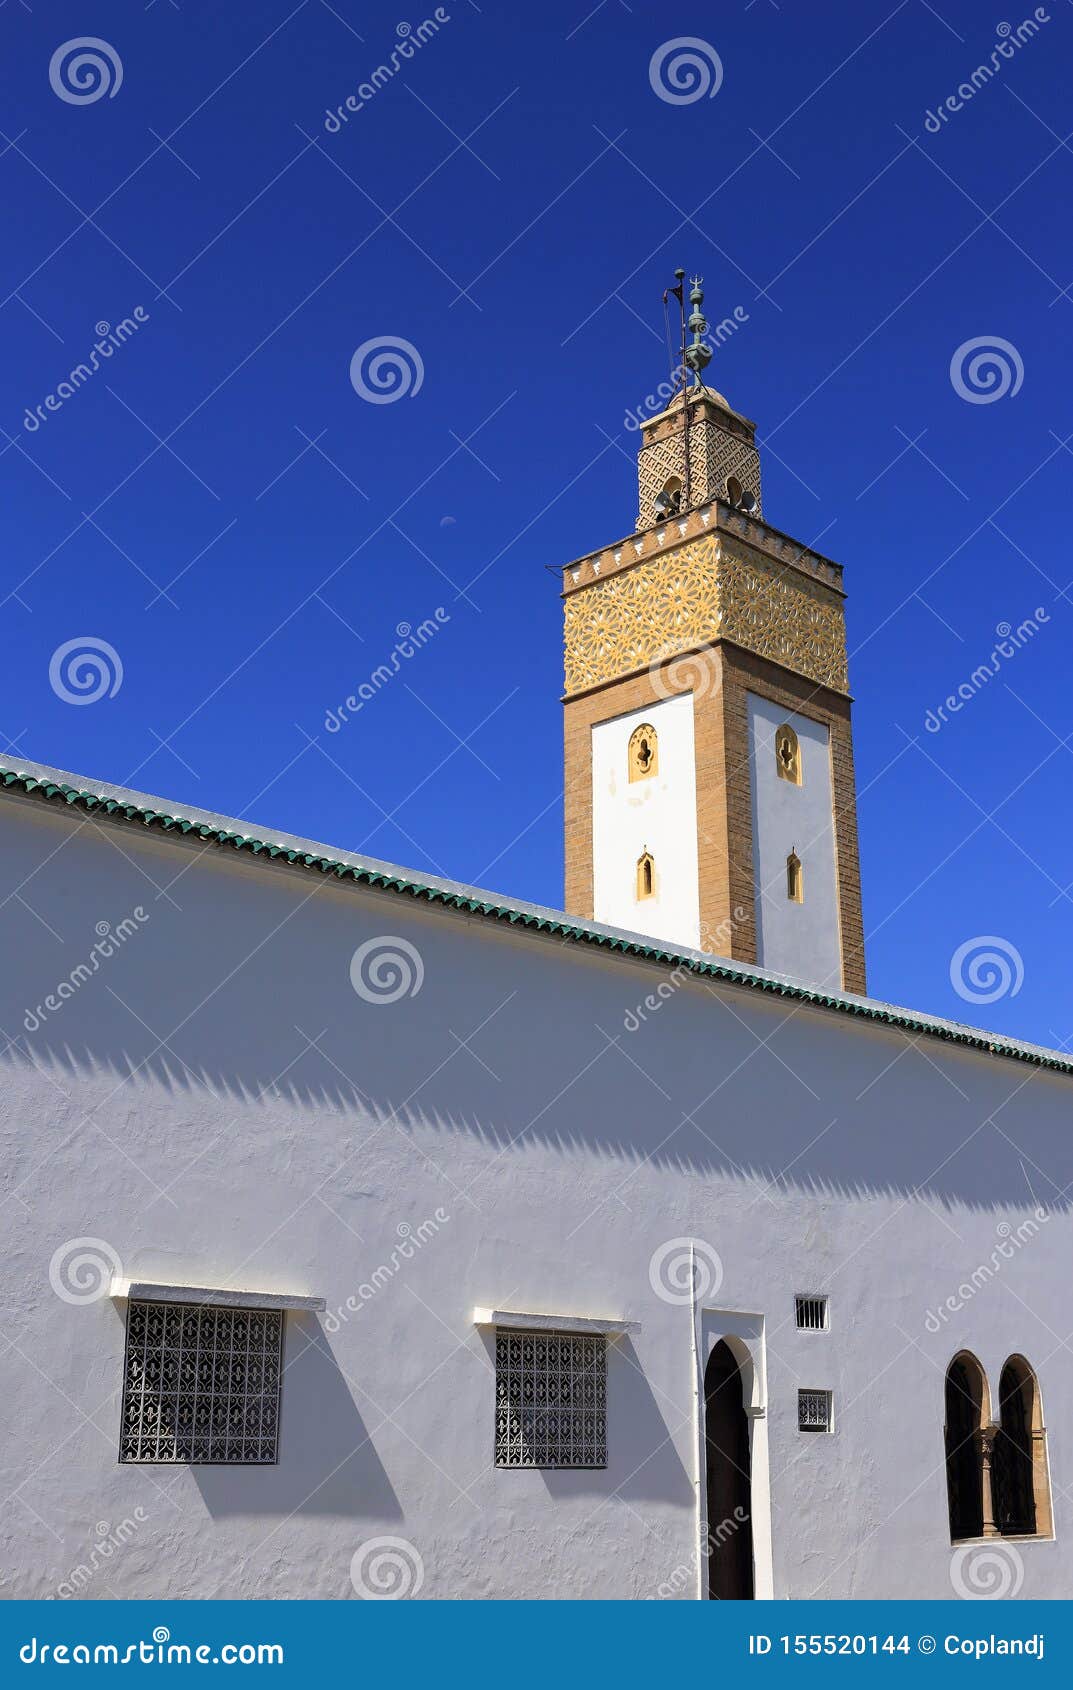 rabat, morocco. ahl fas, or royal palace mosque.